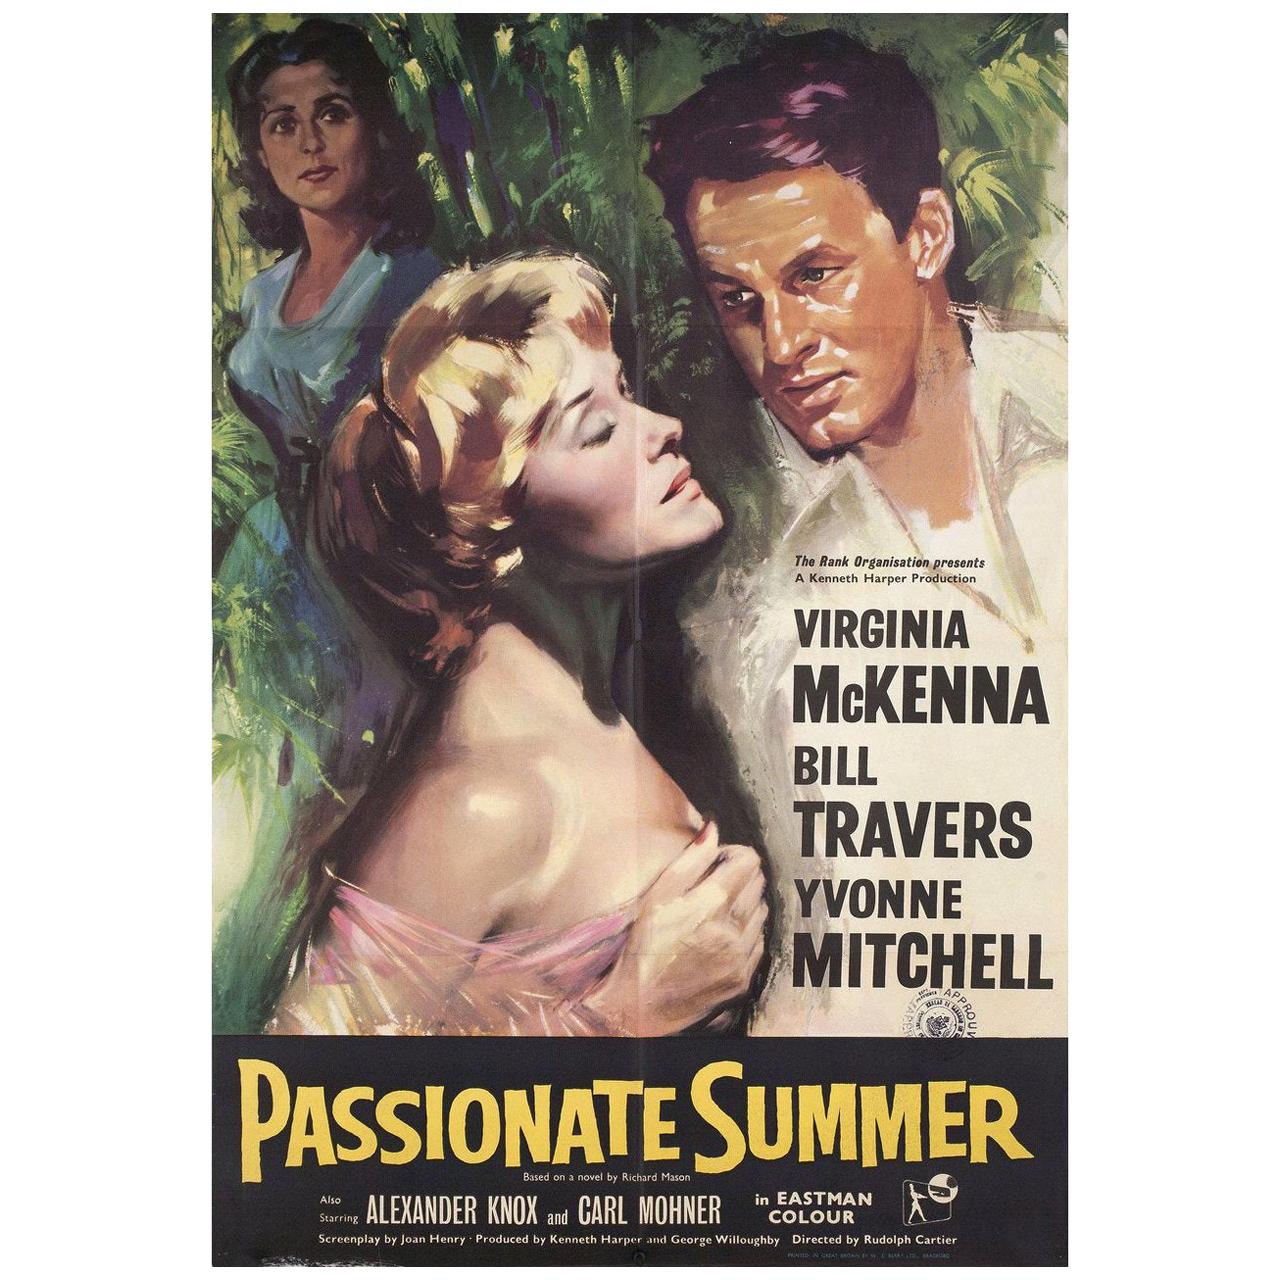 “Passionate Summer” 1958 British One Sheet Film Poster